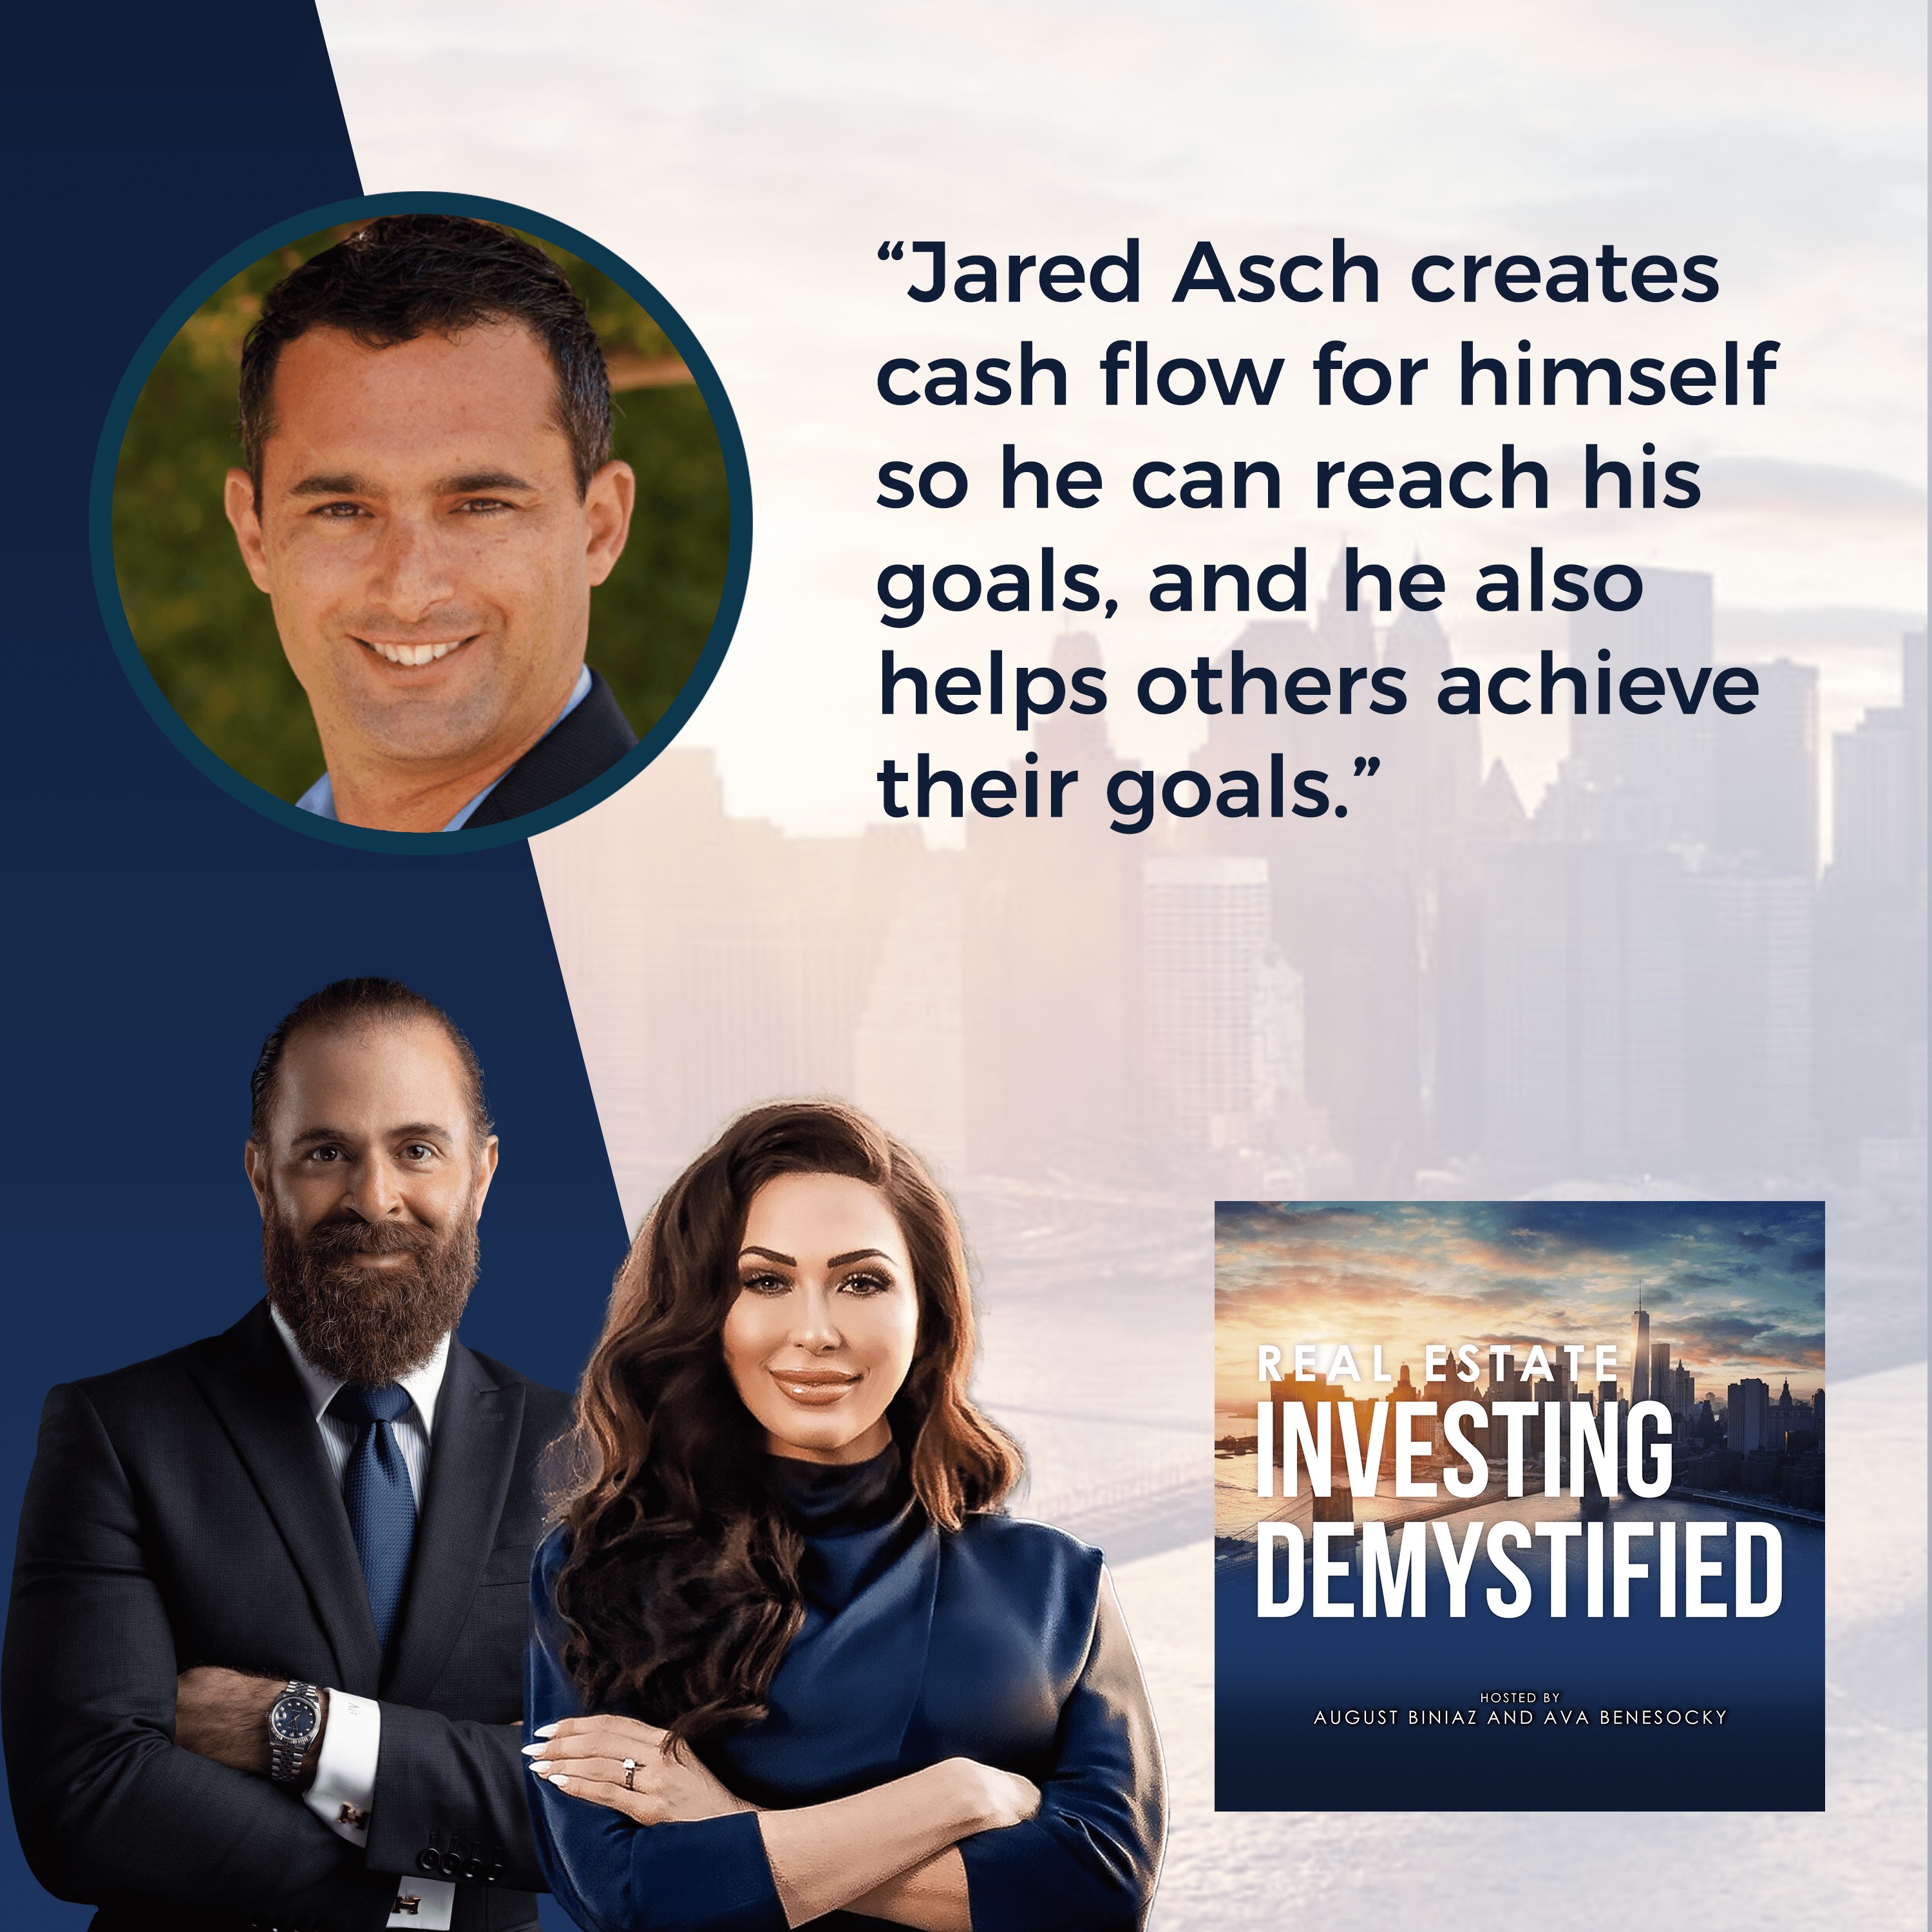 REID Jared Asch | Investor Relationships